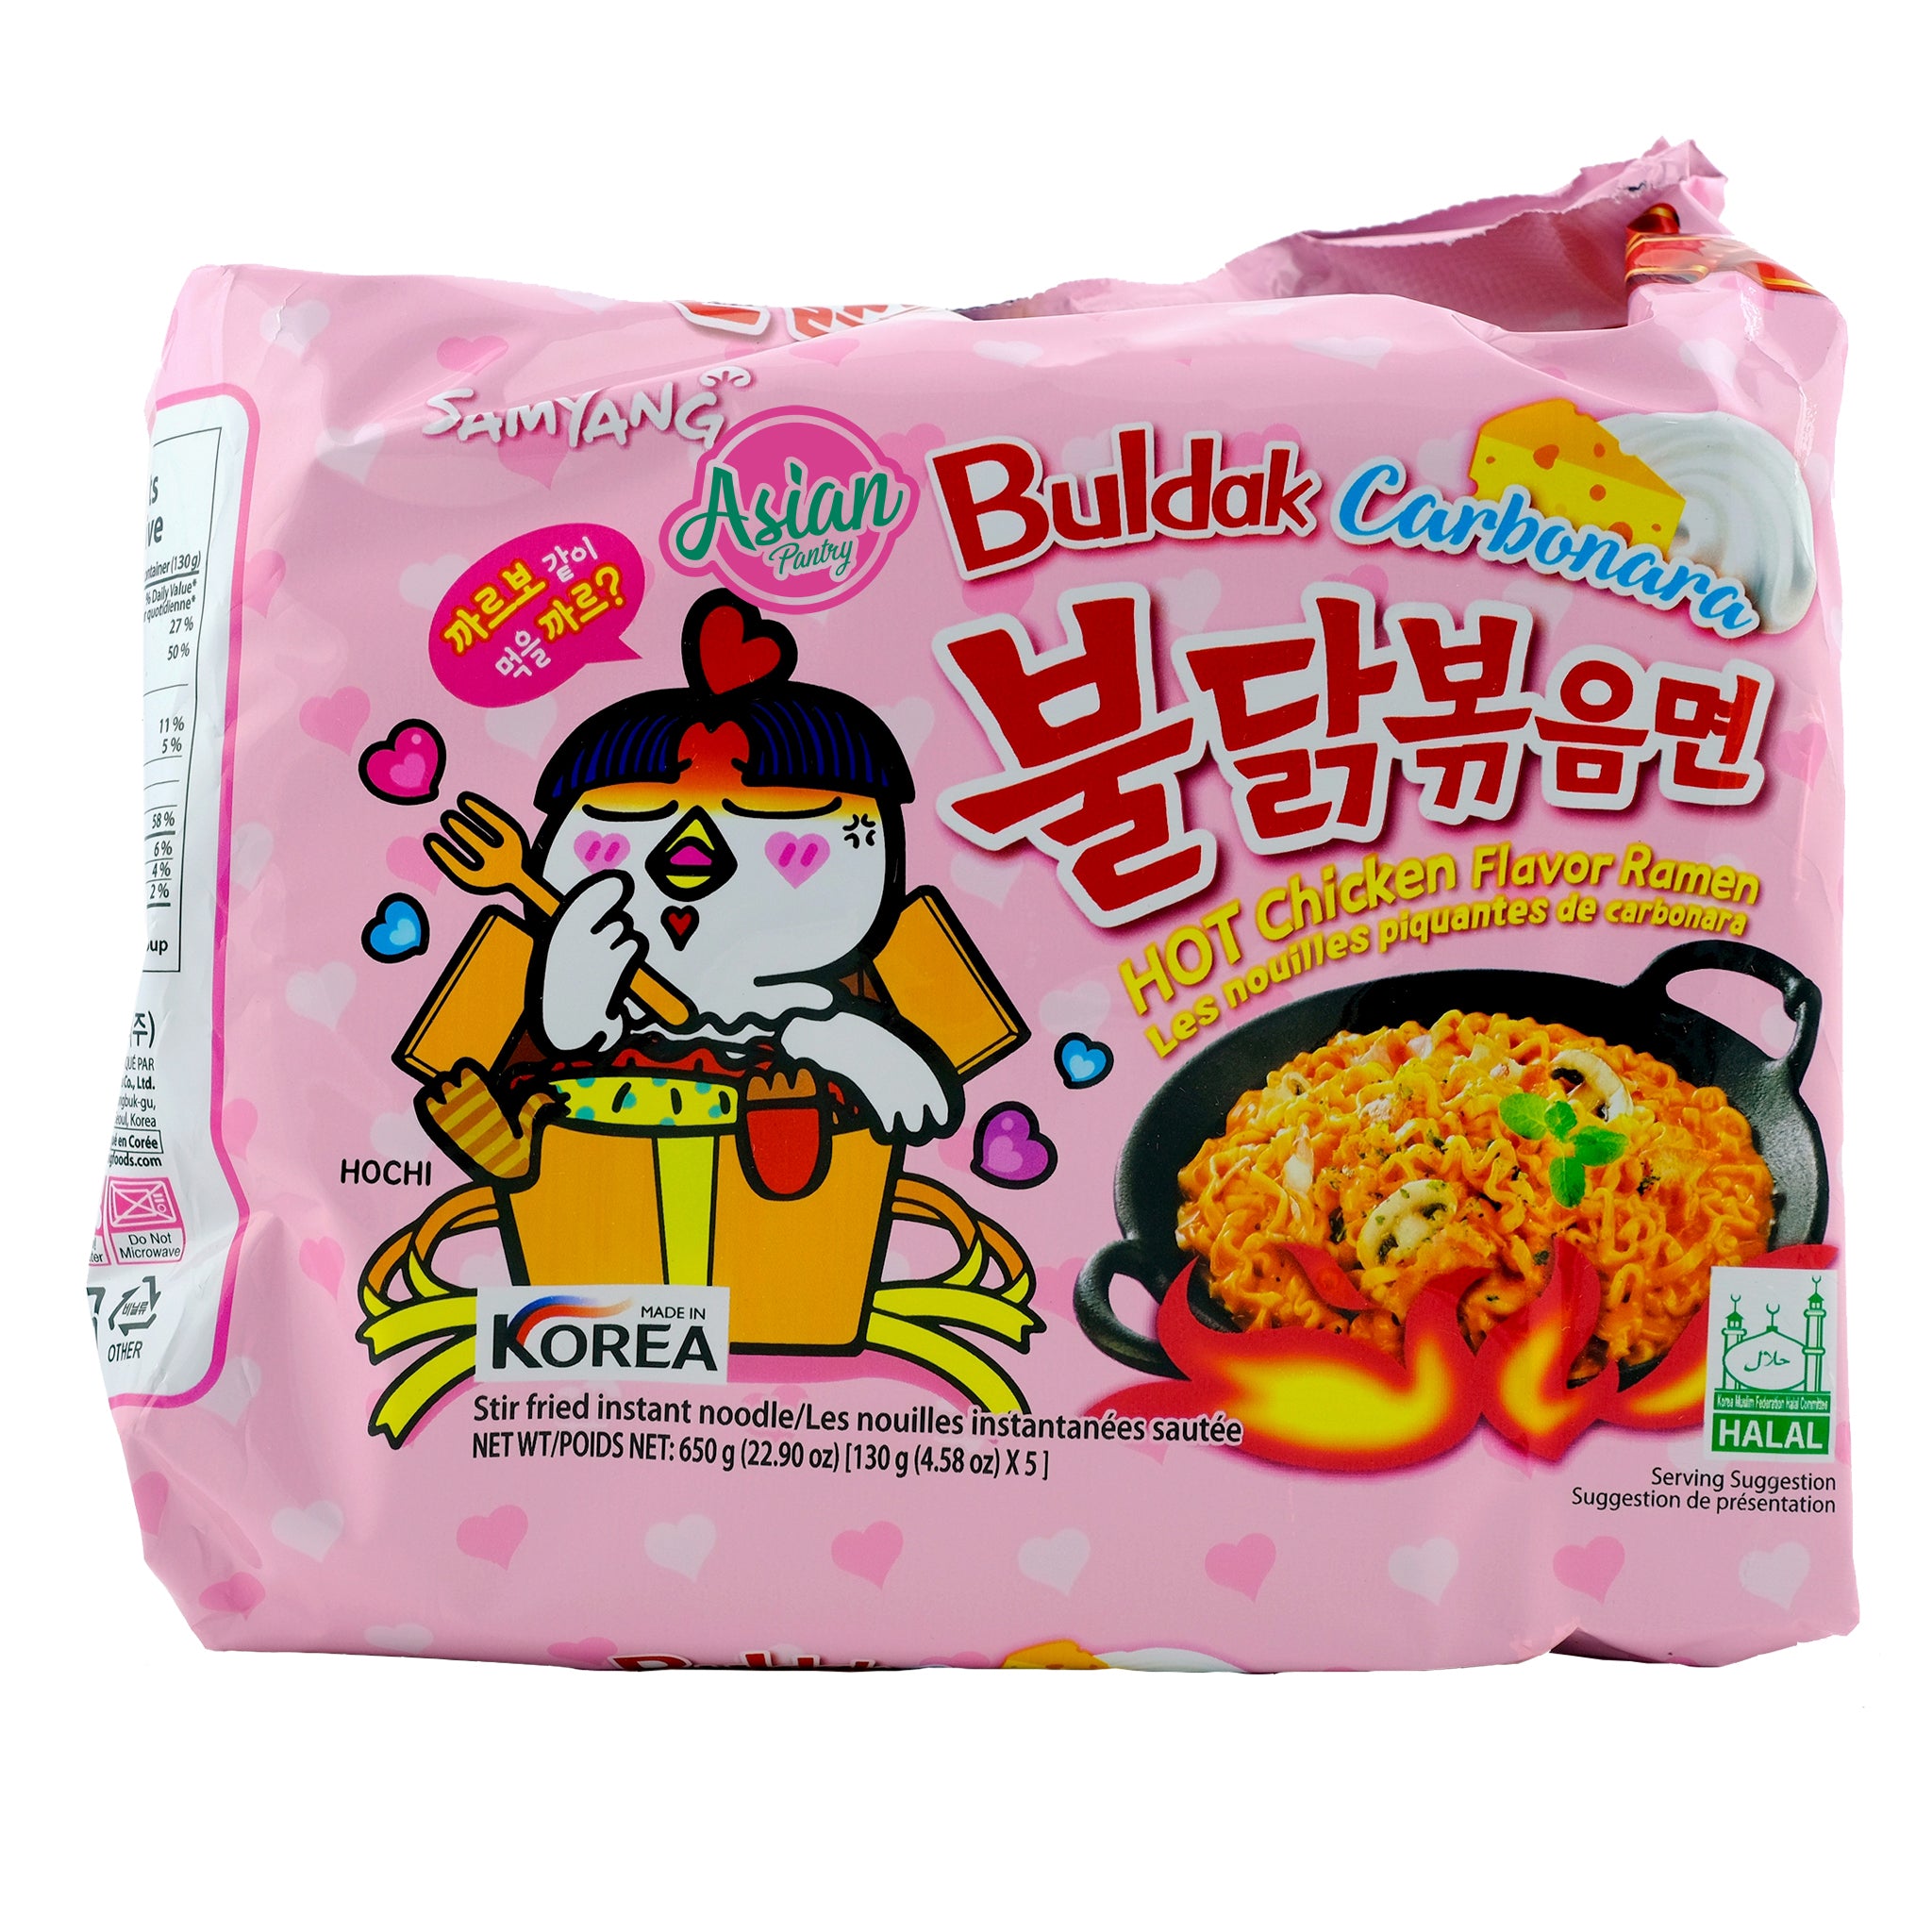 Samyang Buldak Carbonara Hot Chicken Flavour Ramen